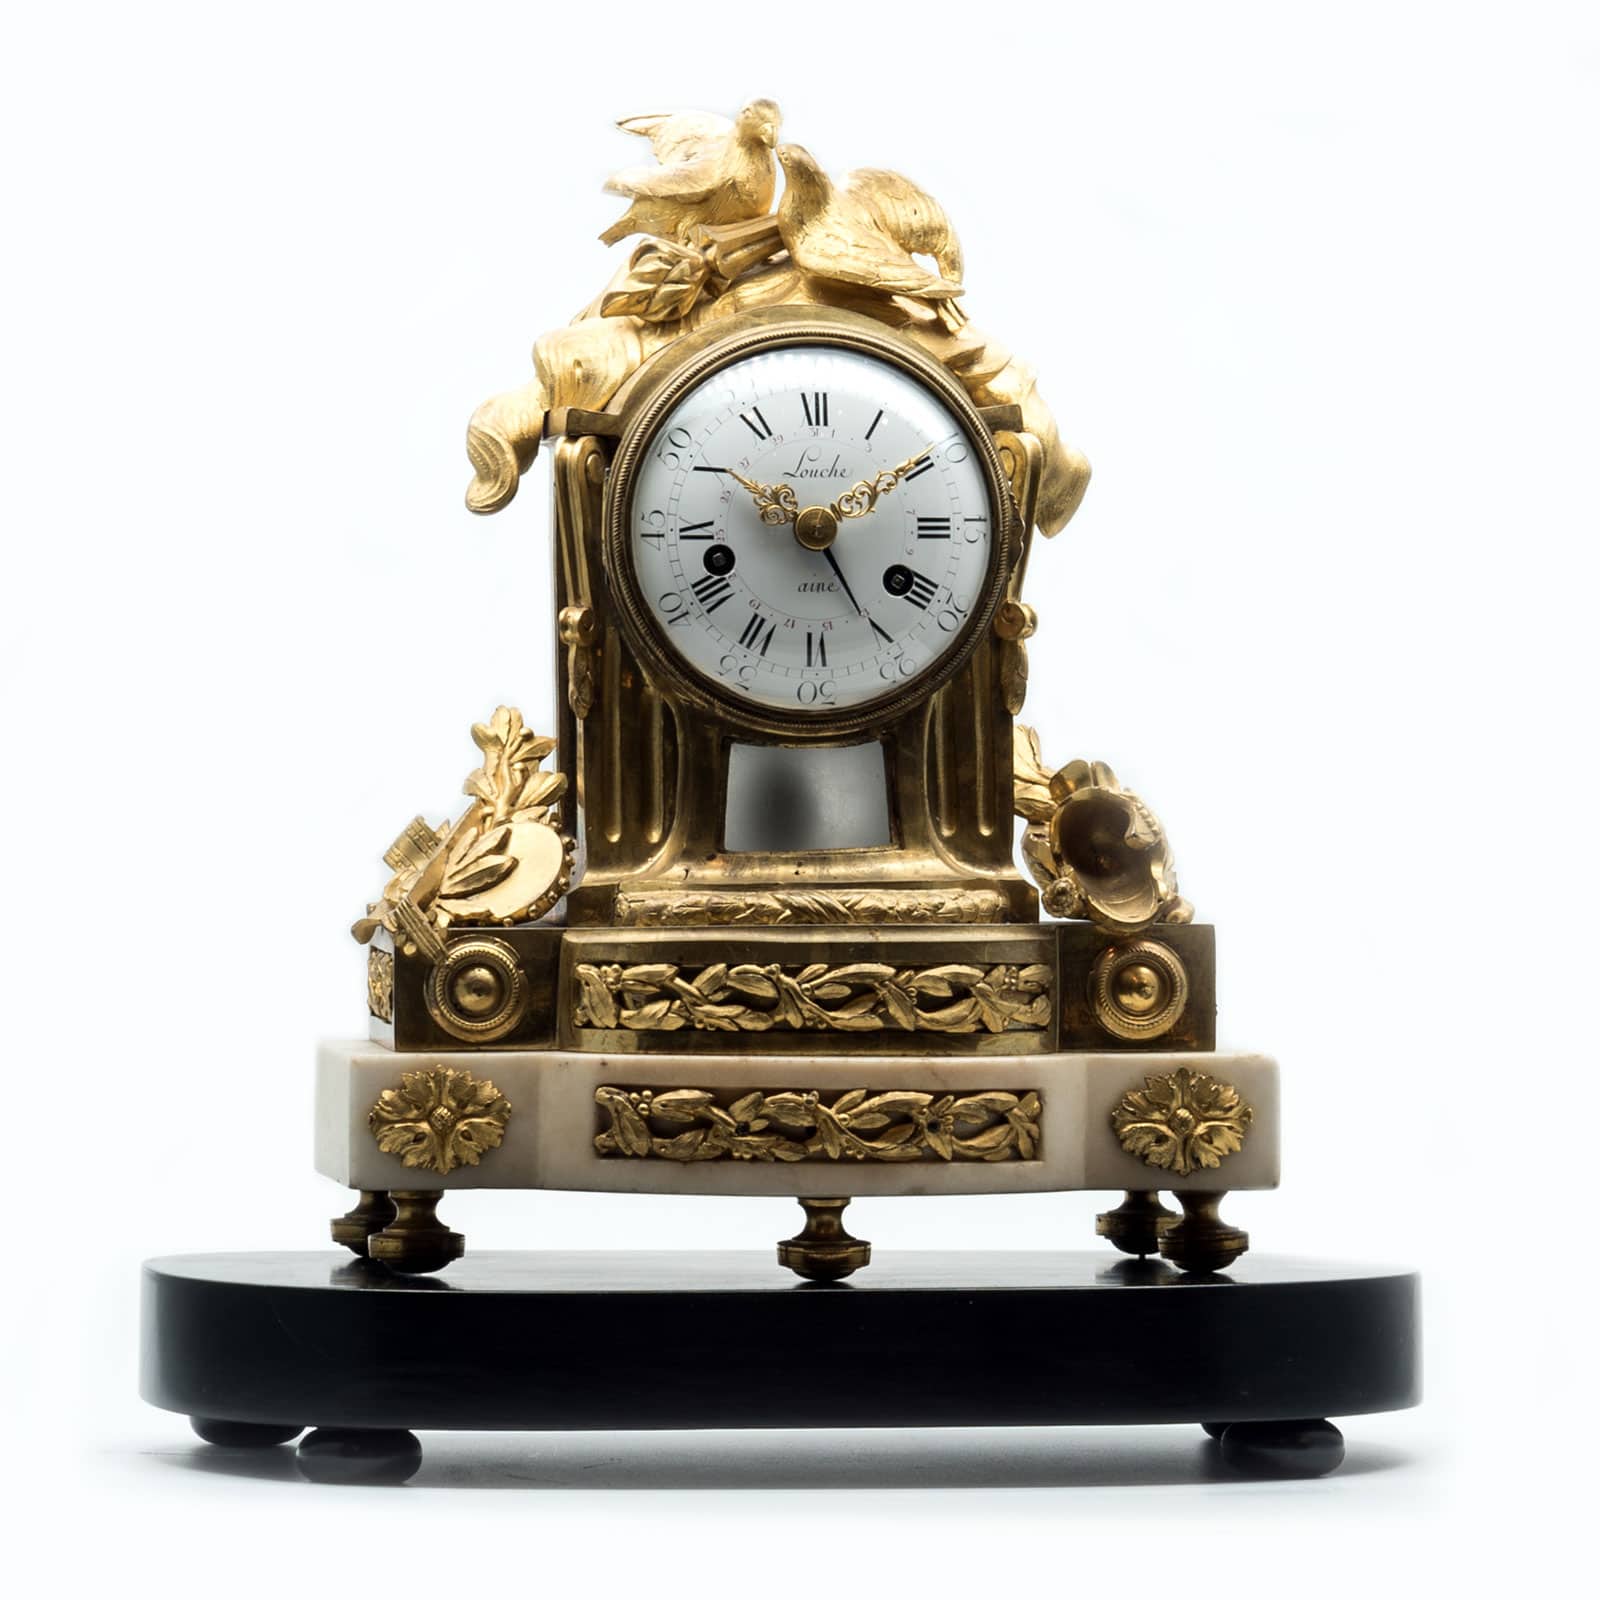 Horloge aimantée LOVE collection MYCLOCK - Provence Arômes Tendance sud